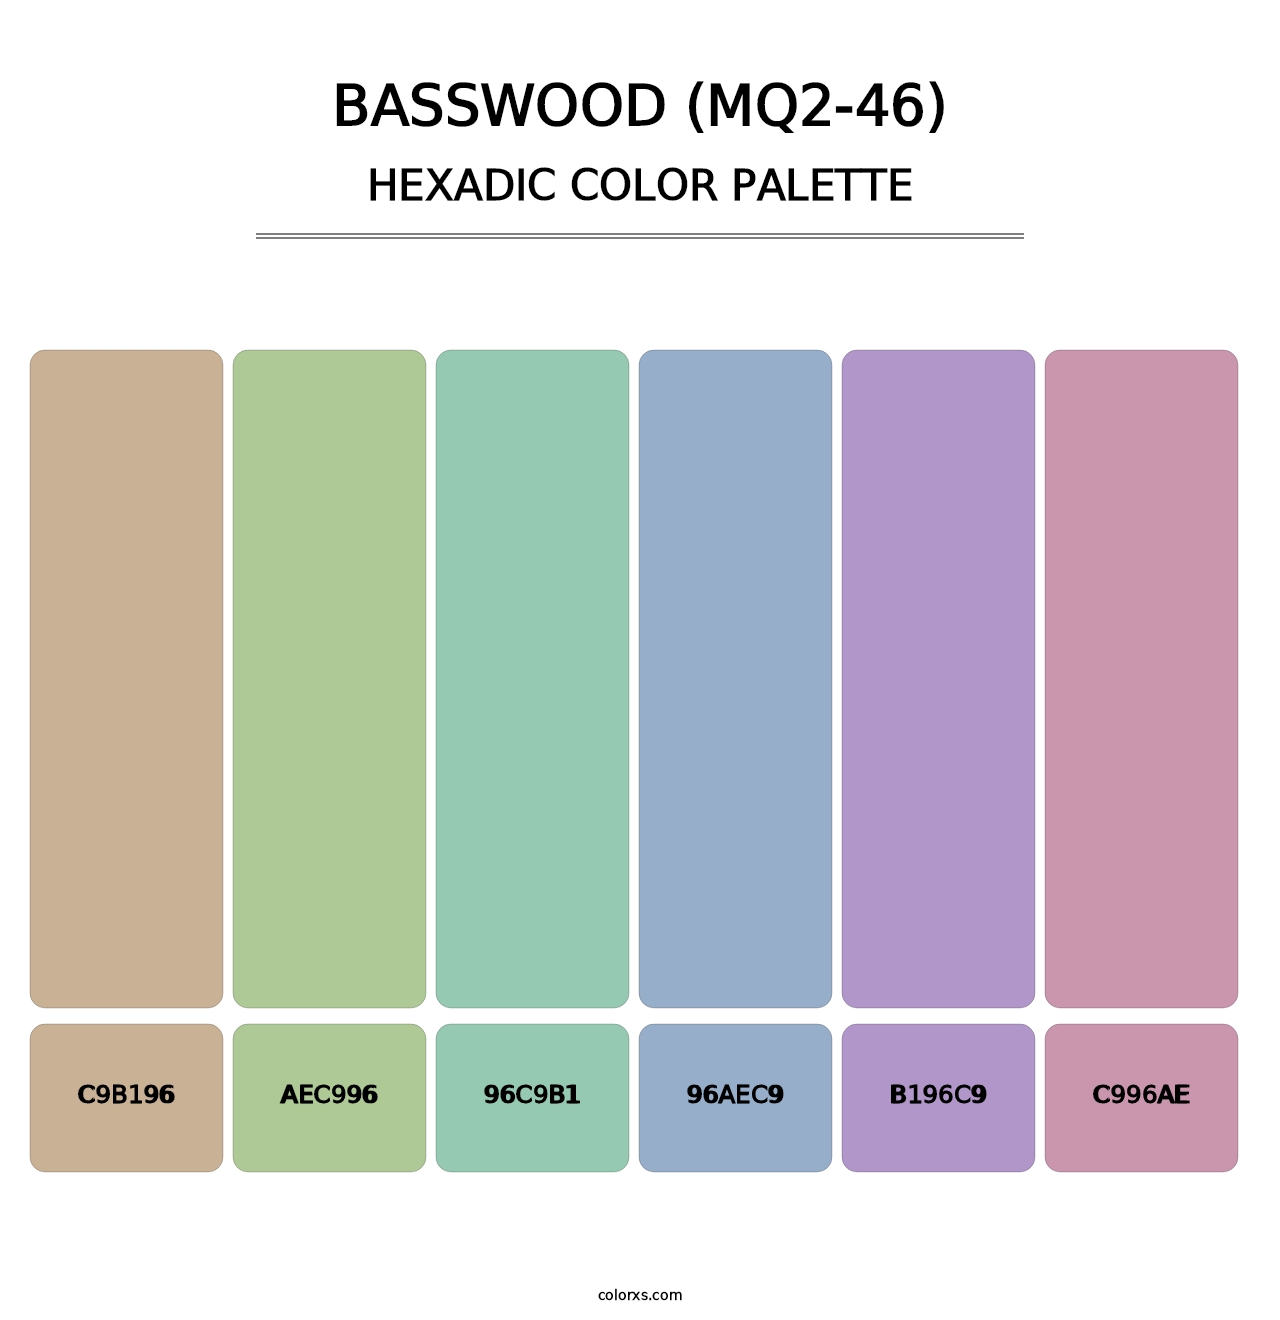 Basswood (MQ2-46) - Hexadic Color Palette